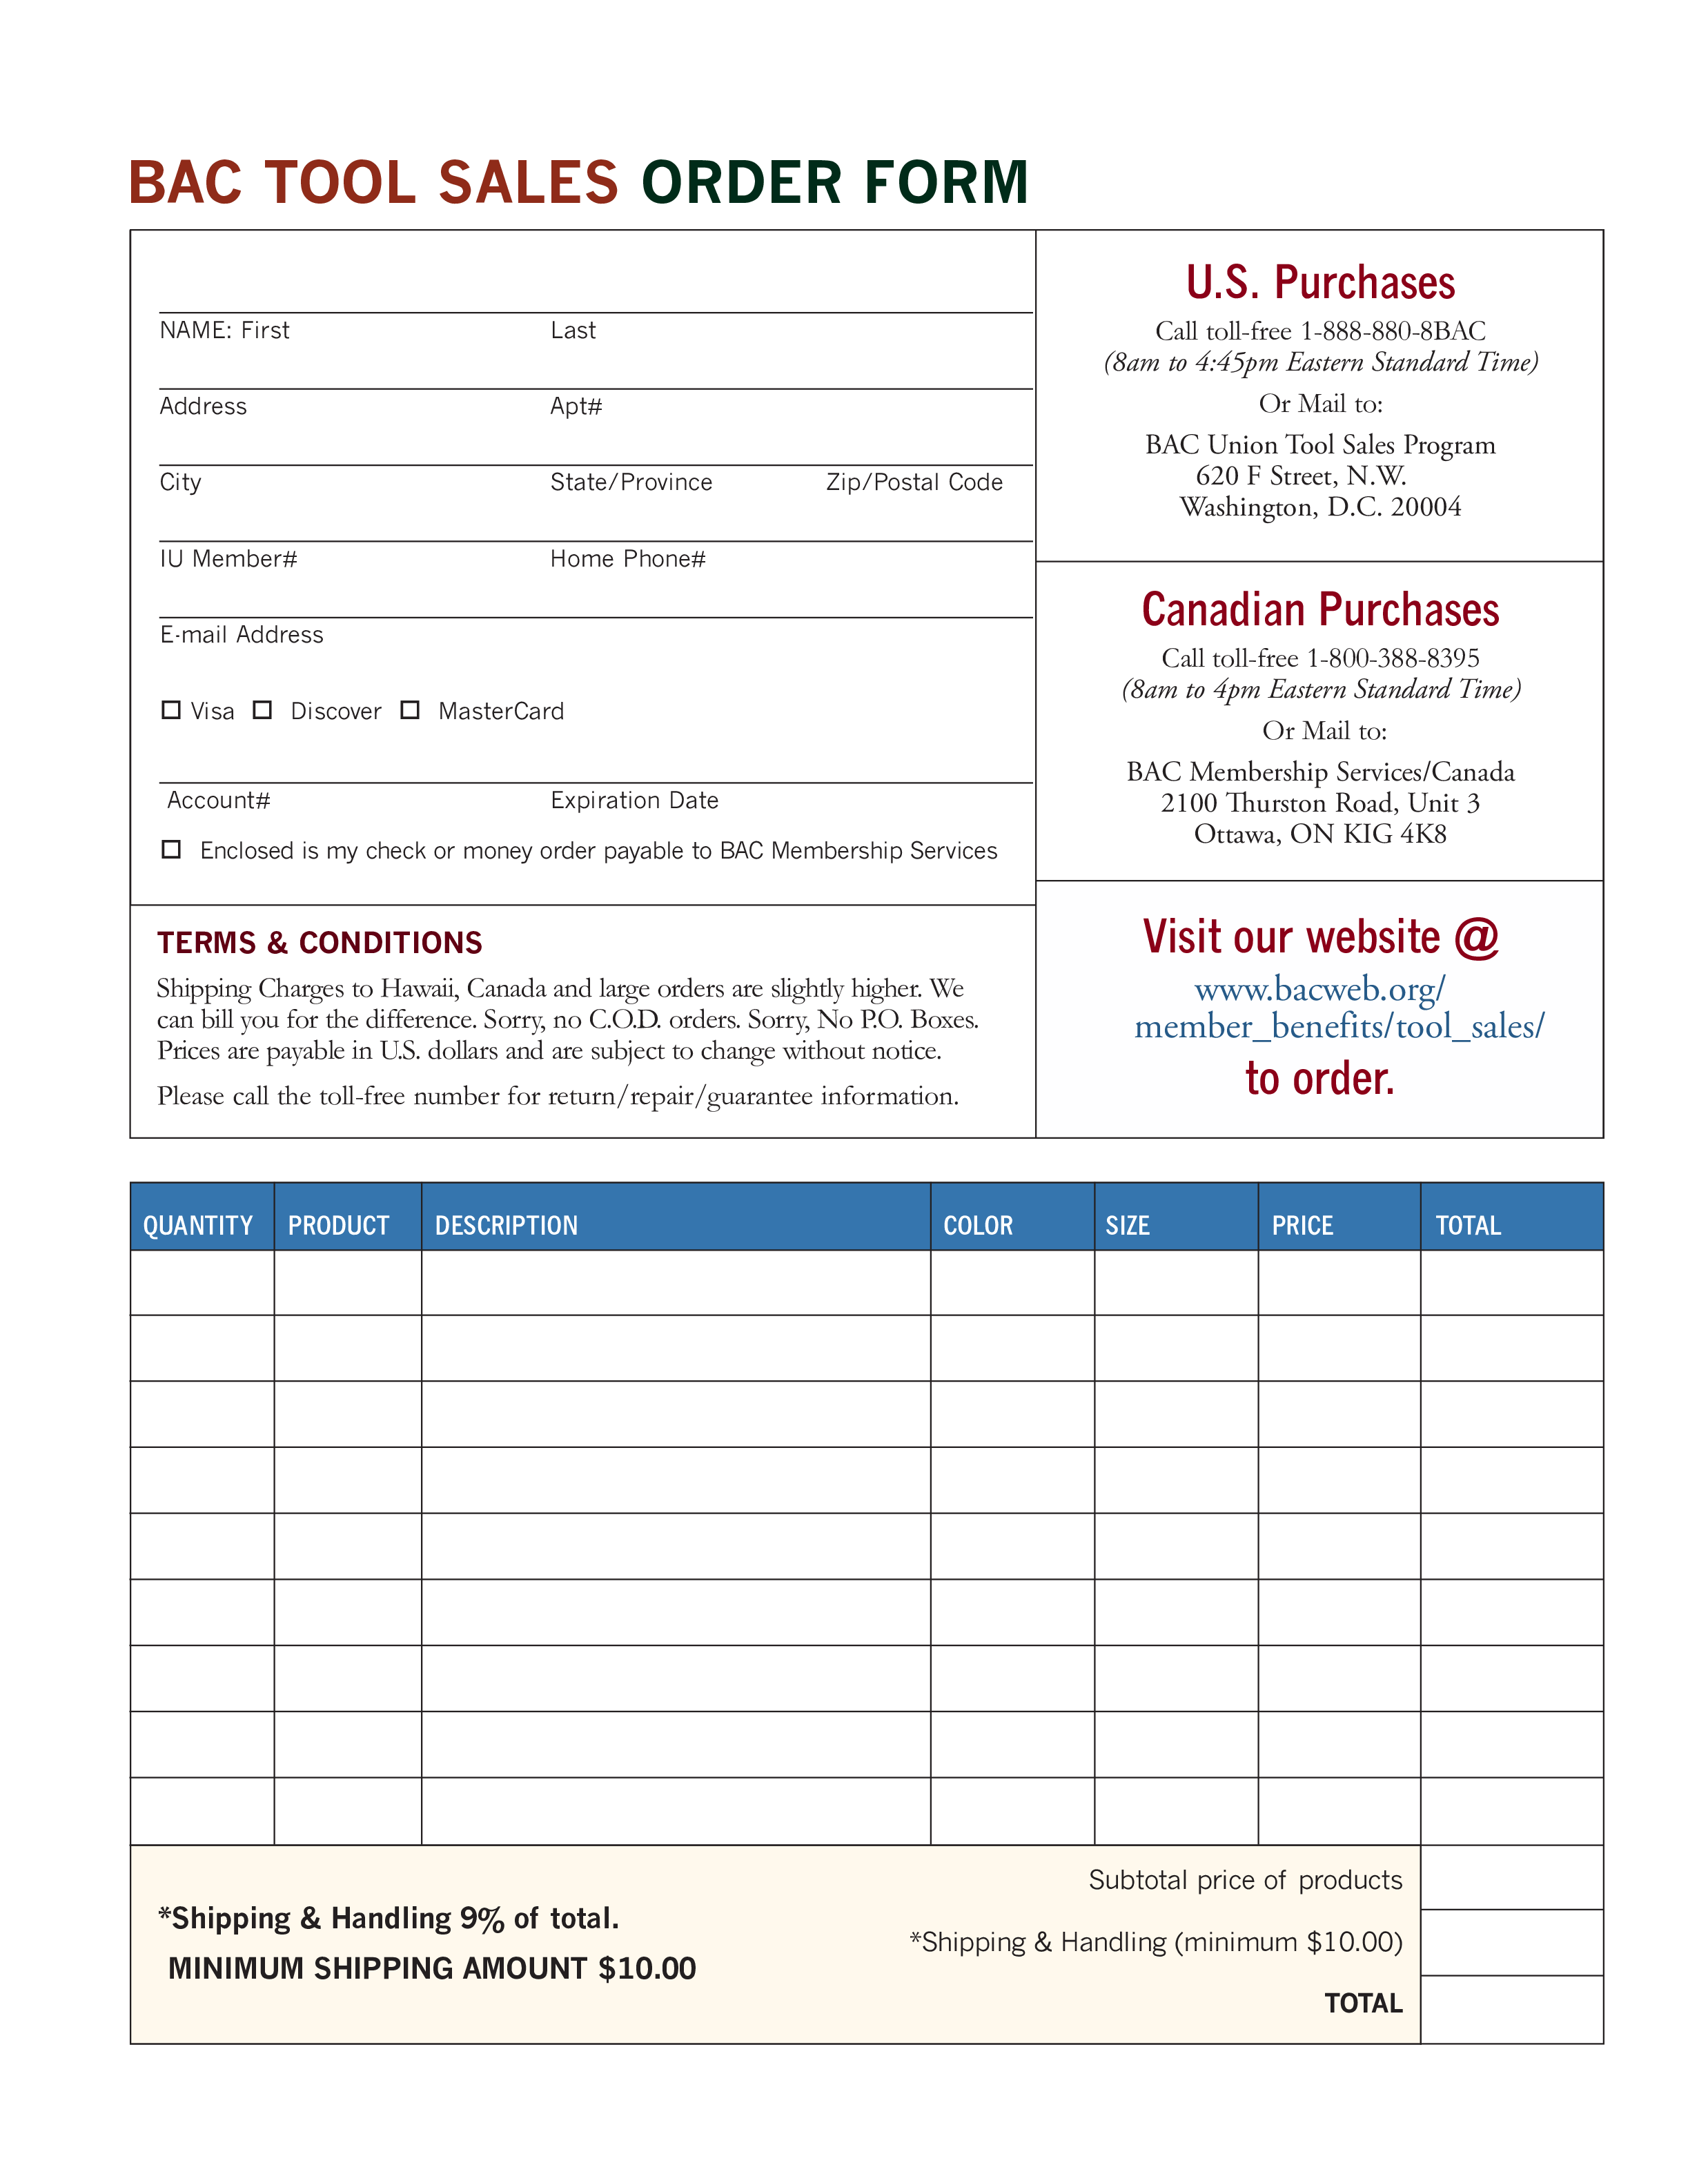 Sales Order Form main image